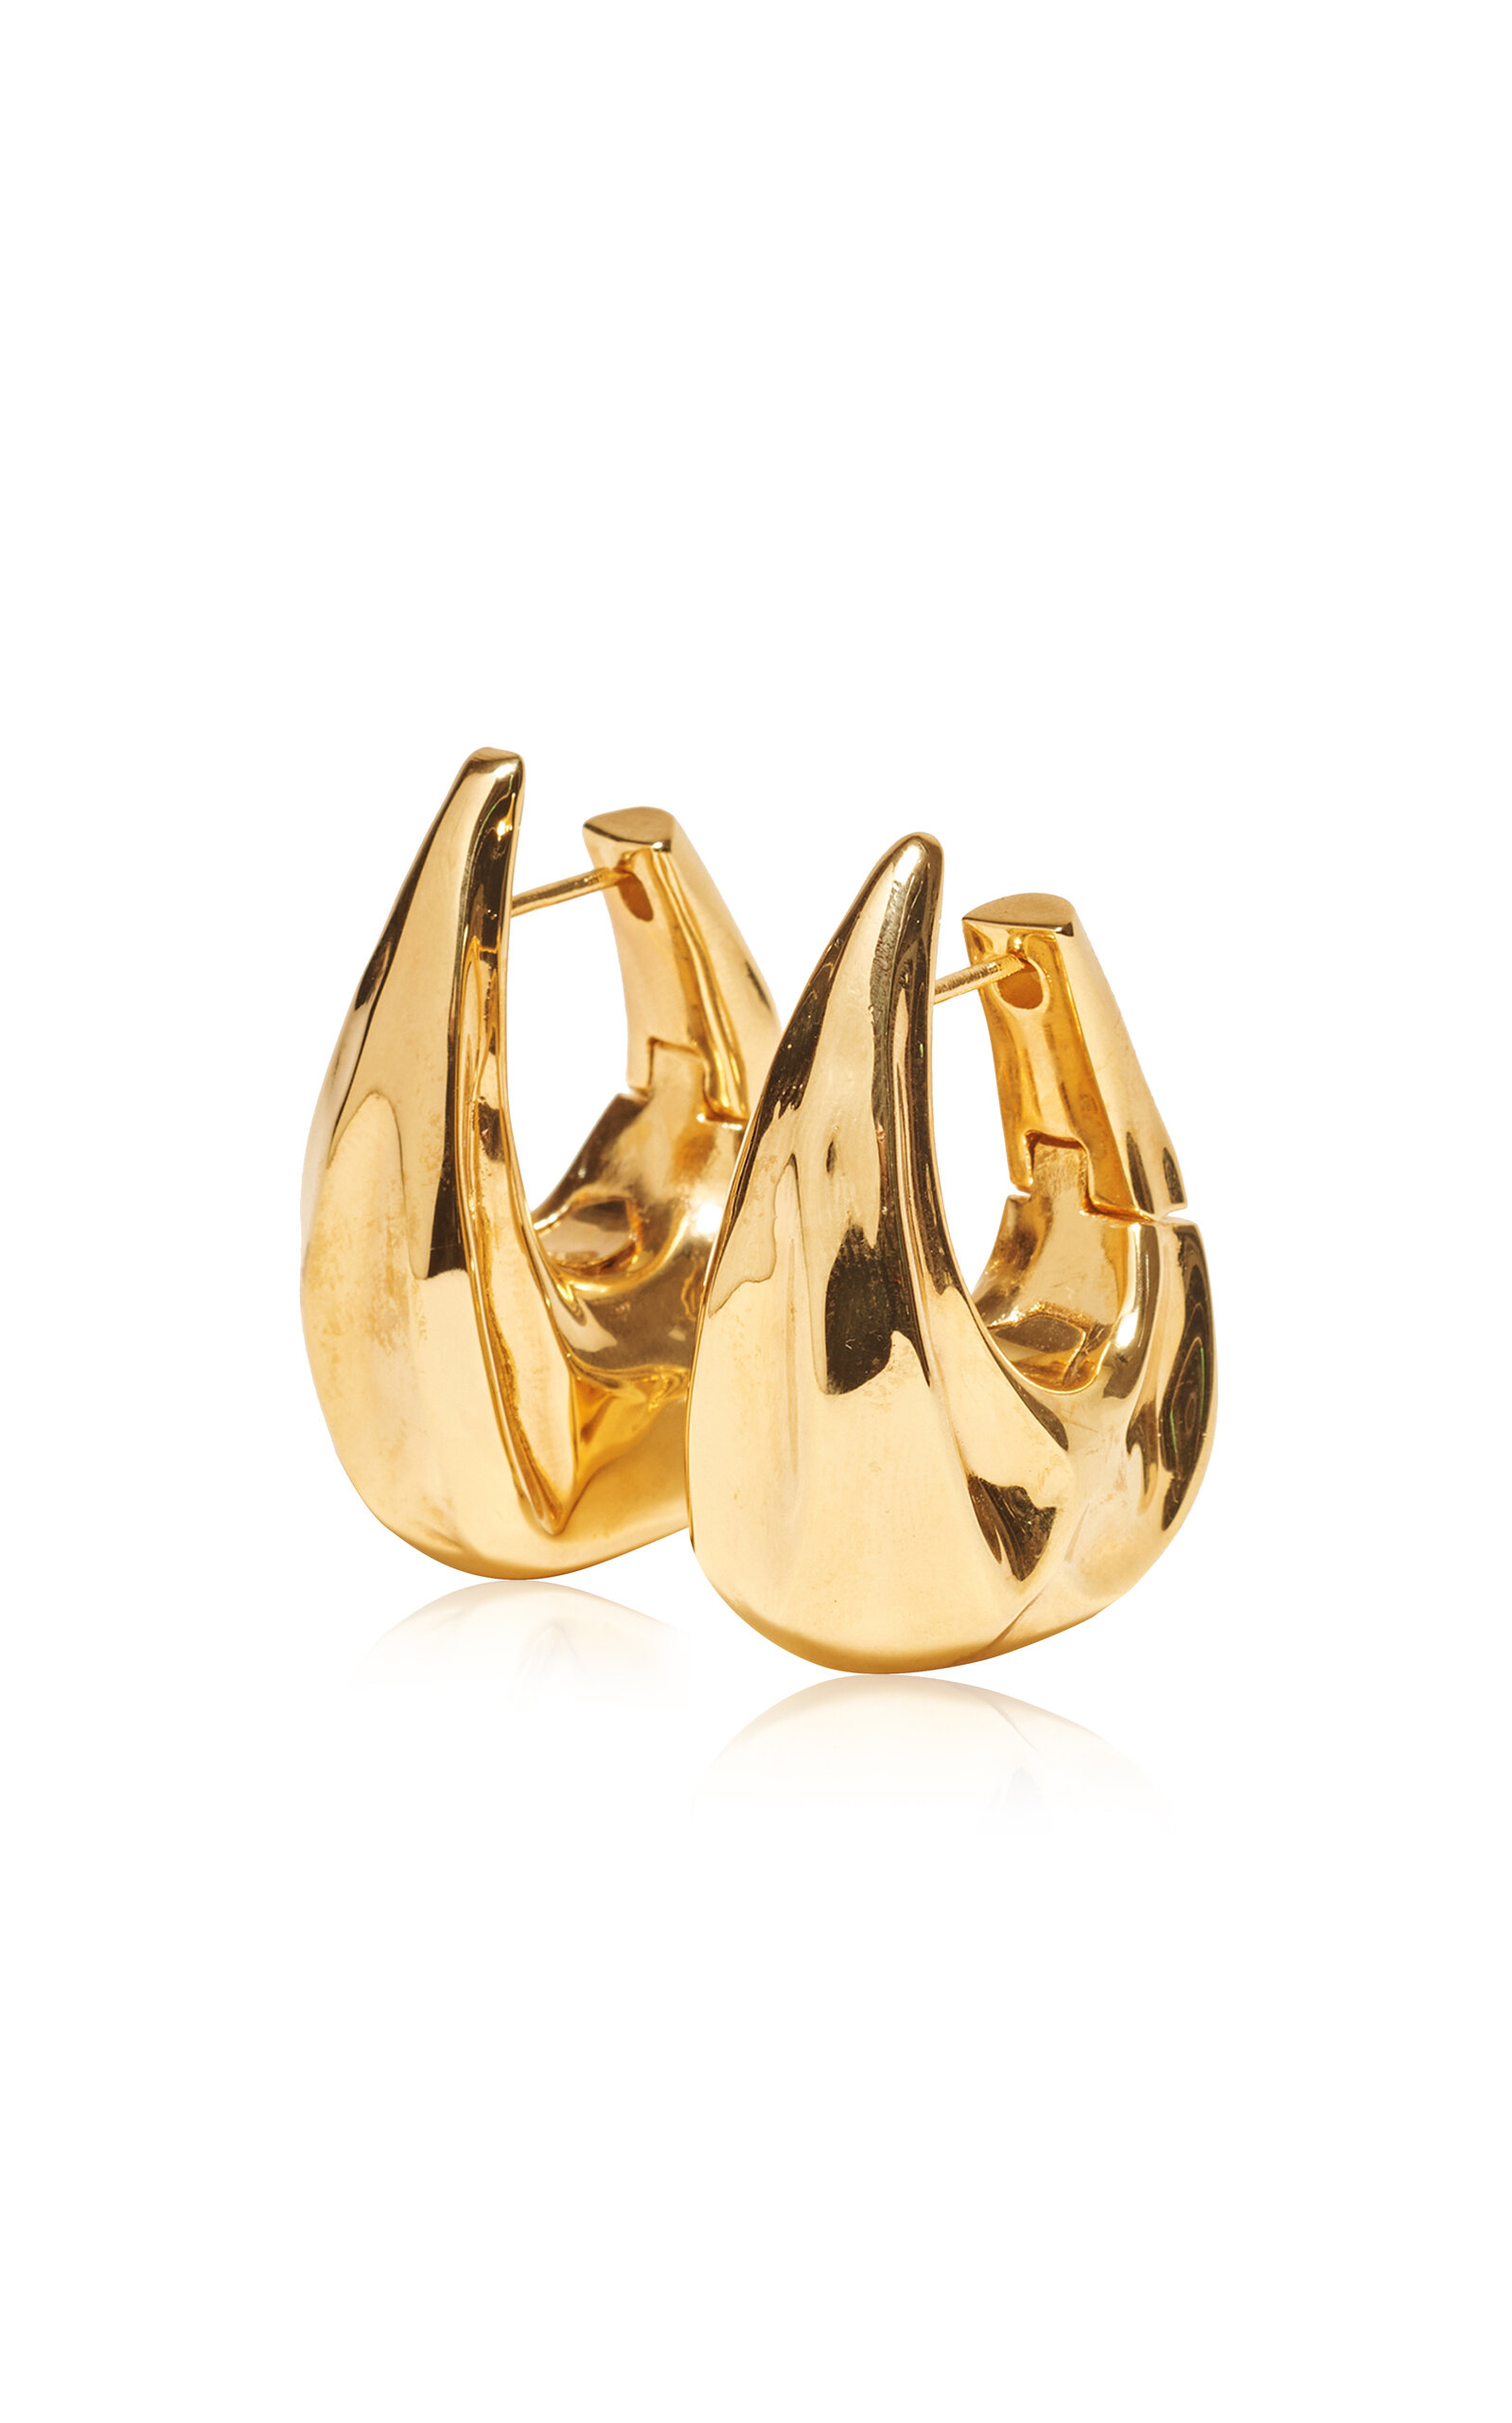 Olivia Medium 18k Gold-Plated Earrings